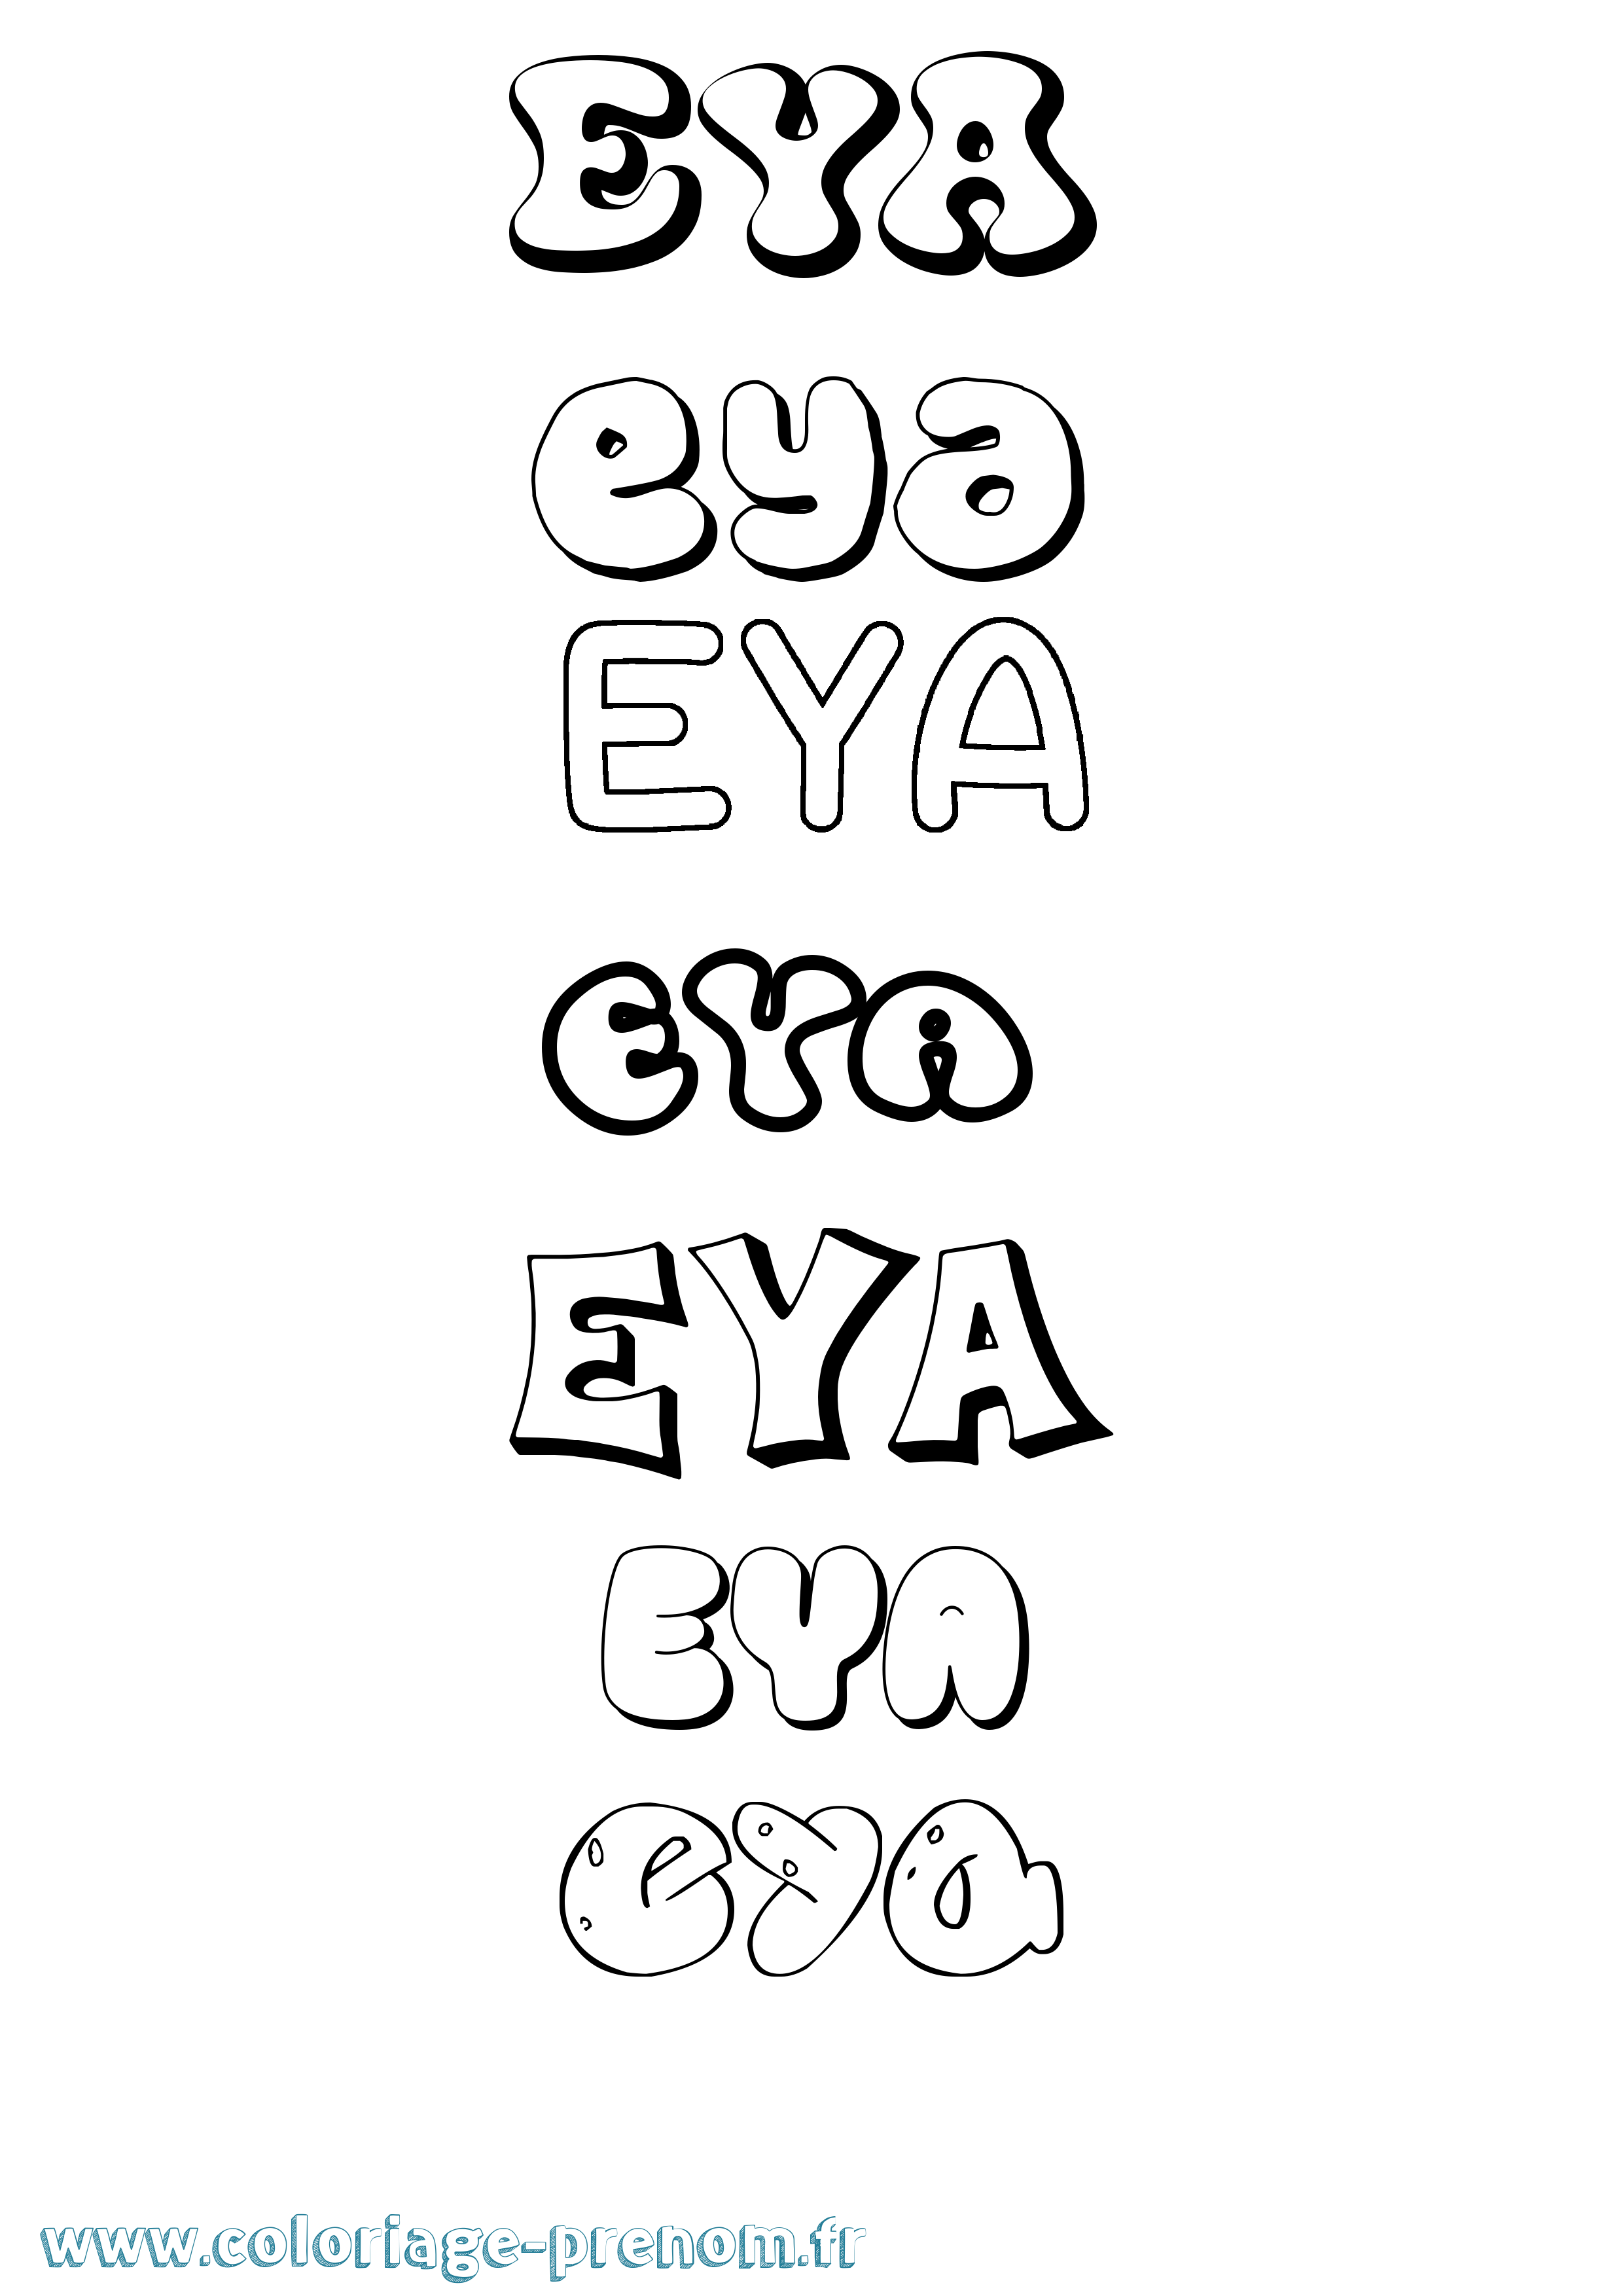 Coloriage prénom Eya